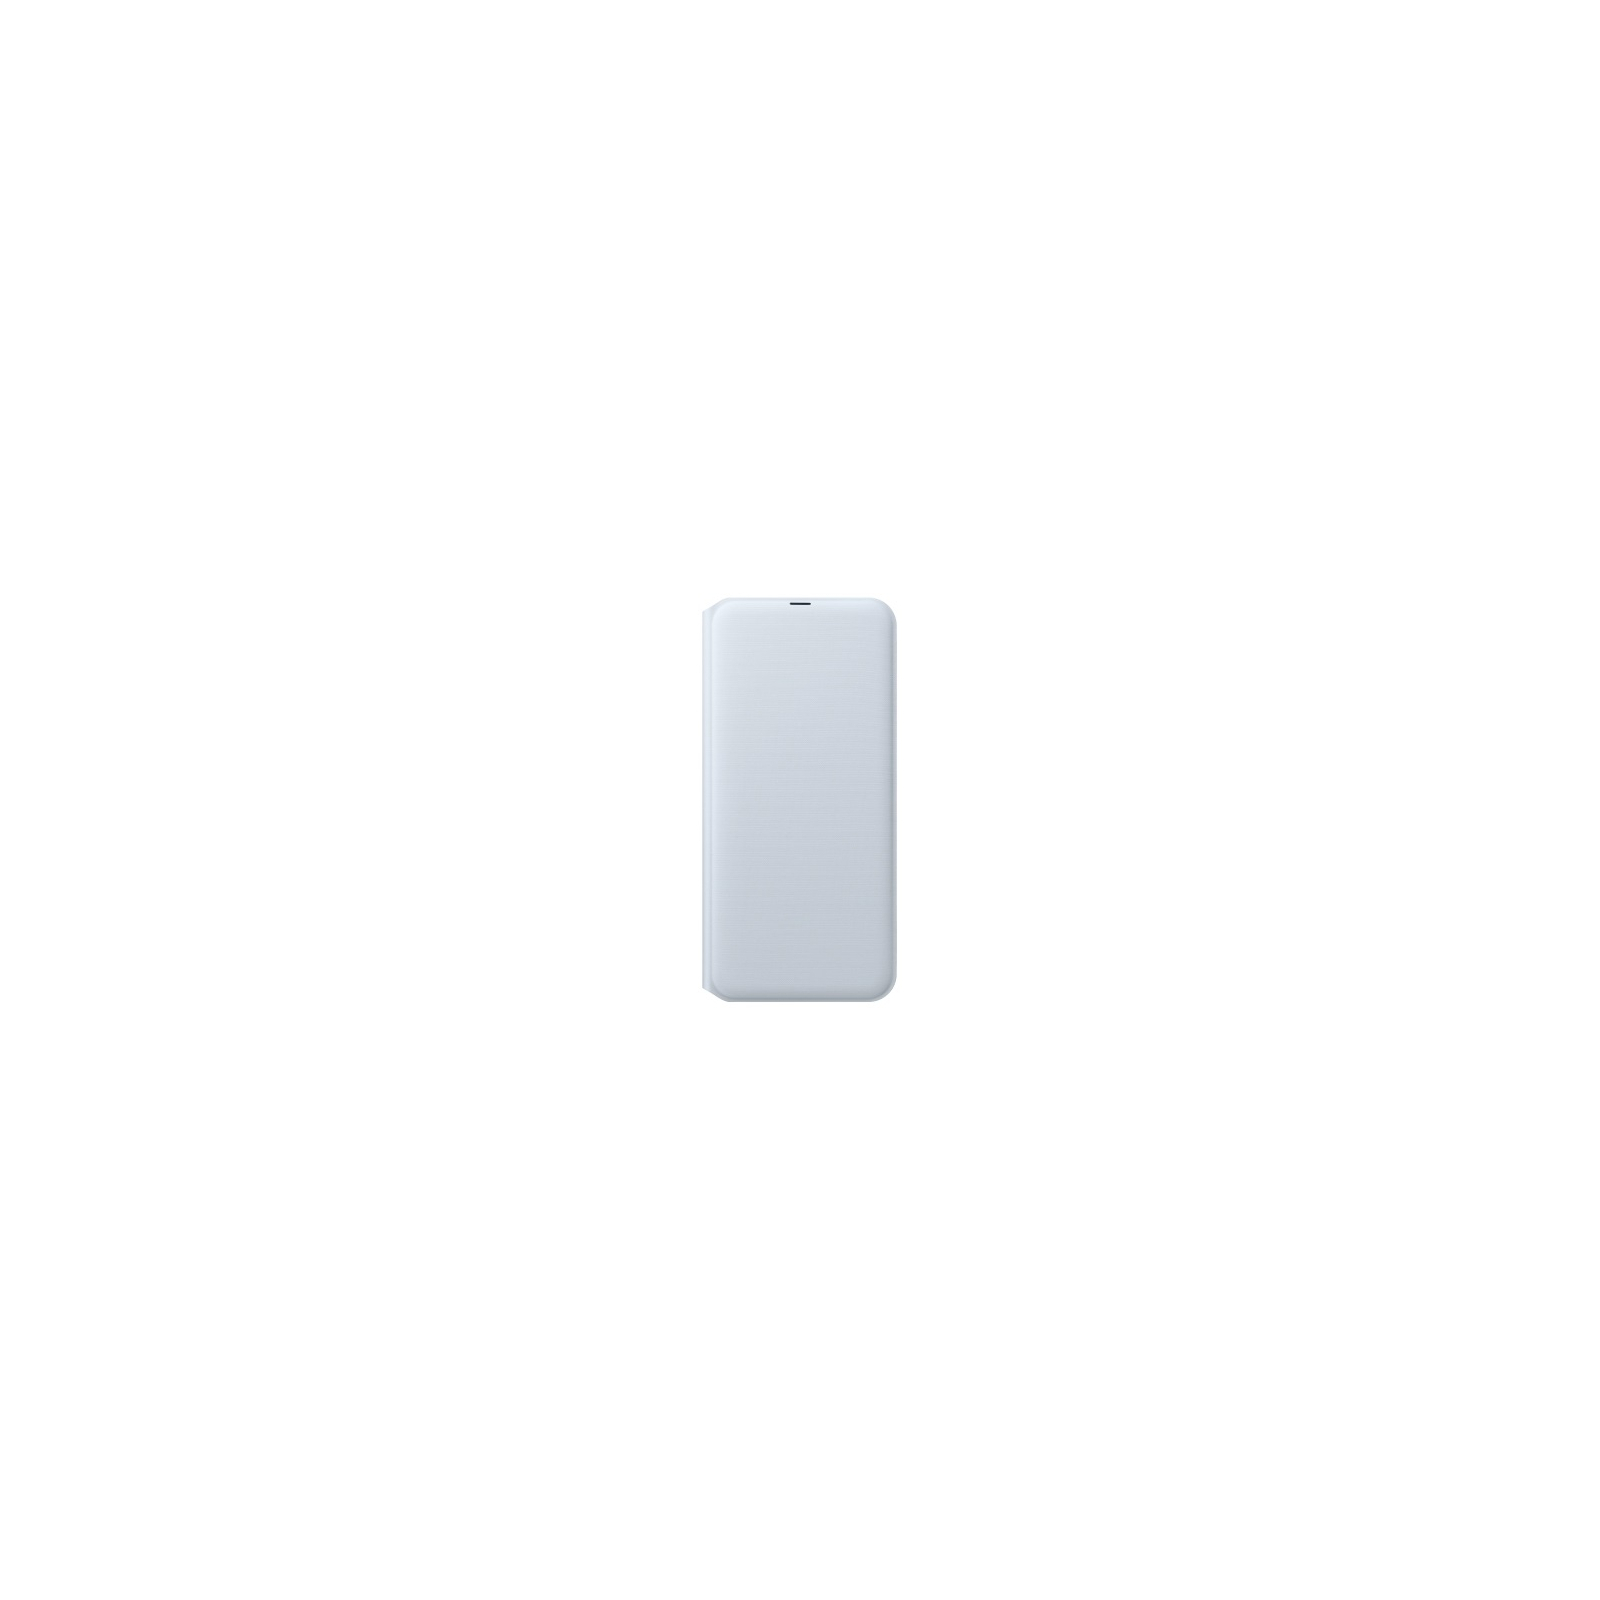 Чехол для мобильного телефона Samsung Galaxy A50 (A505F) White Wallet Cover (EF-WA505PWEGRU)